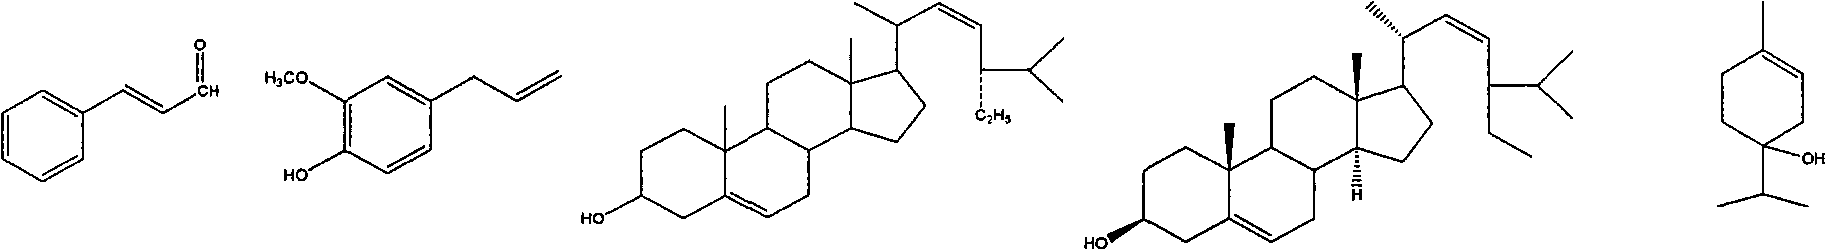 Cinnamomum zeylanicum extract and use thereof in acaricide